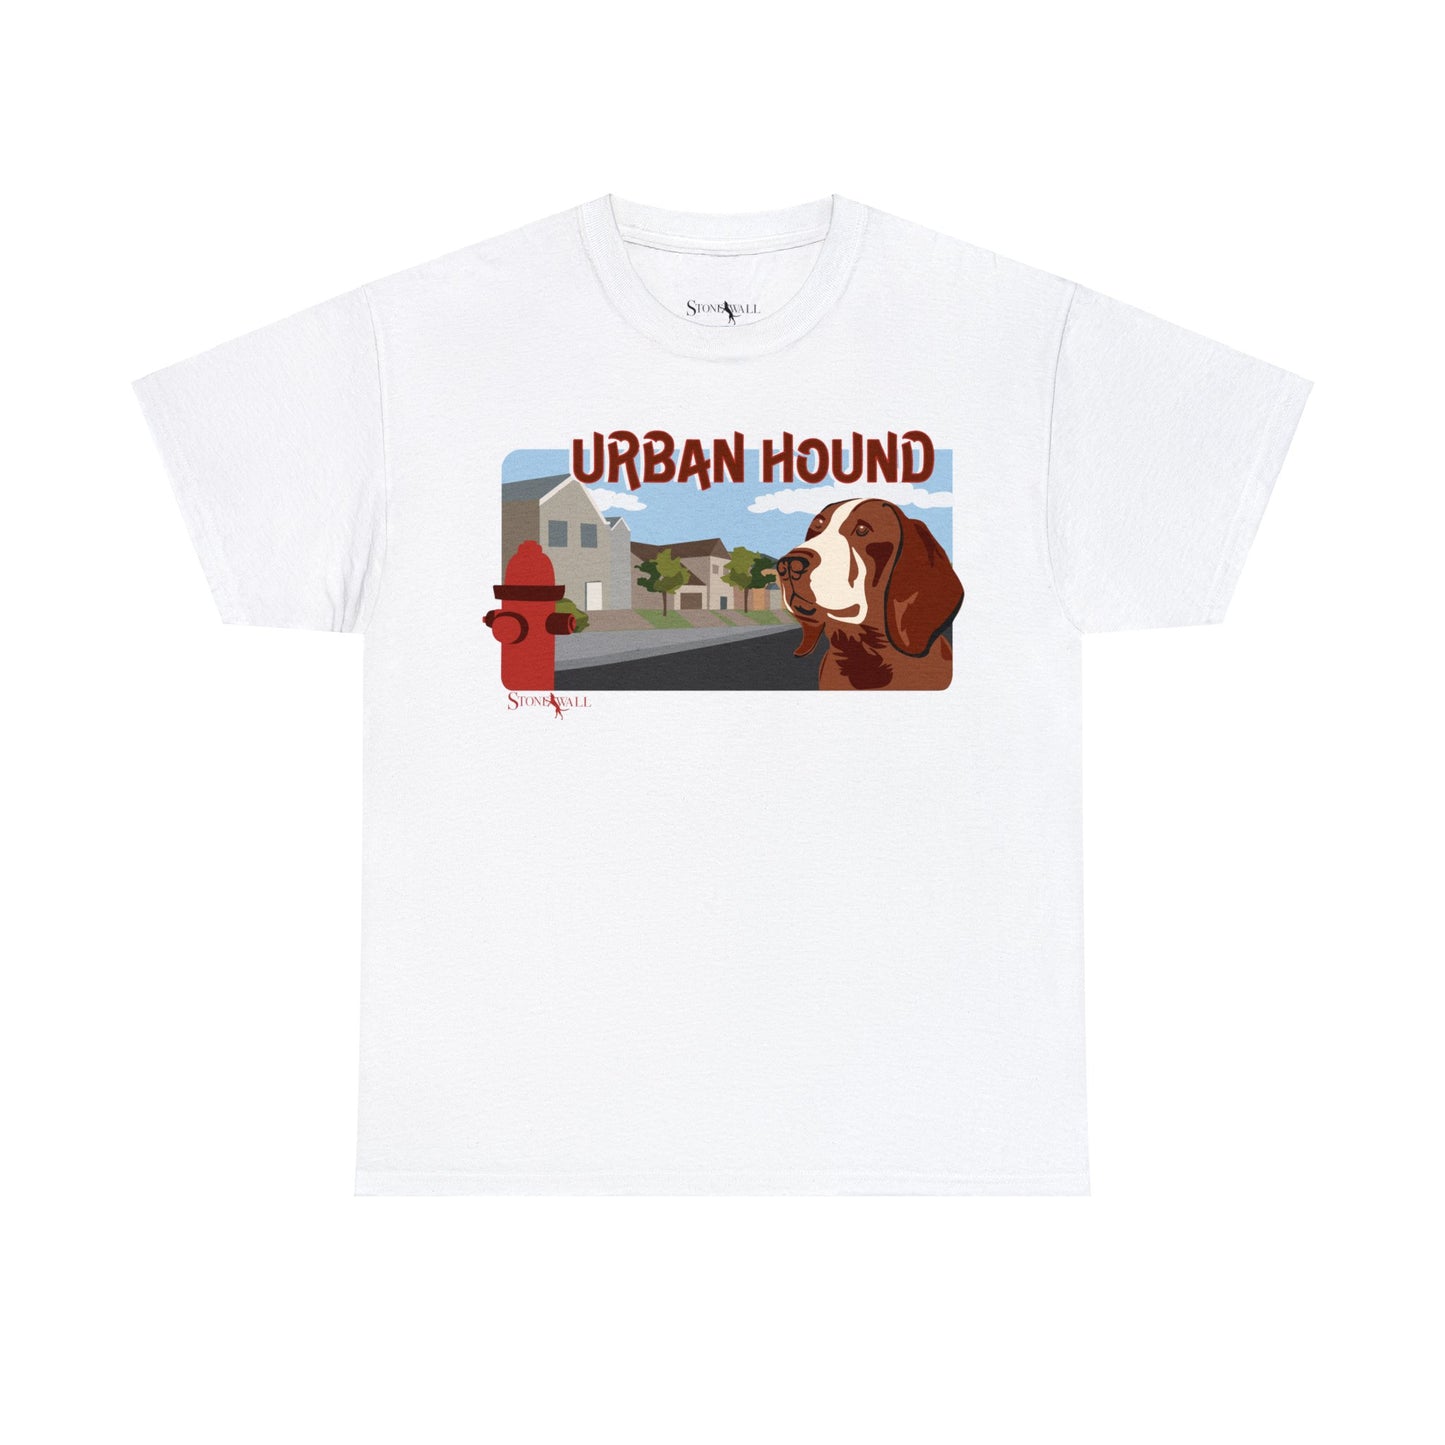 Urban Hound- White tee